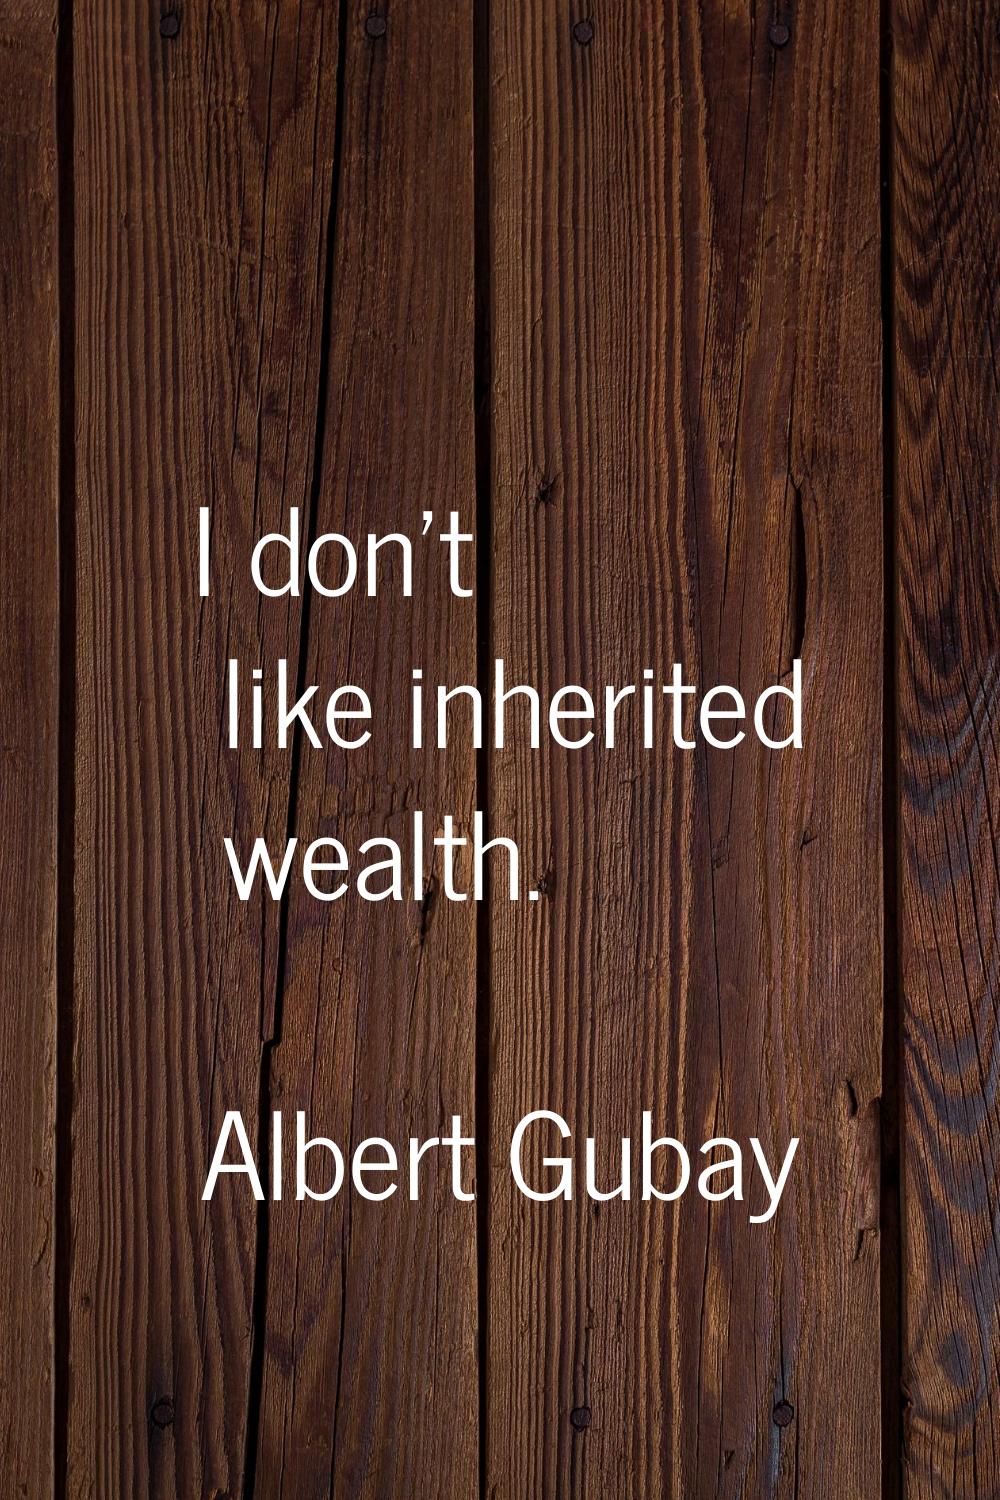 I don't like inherited wealth.